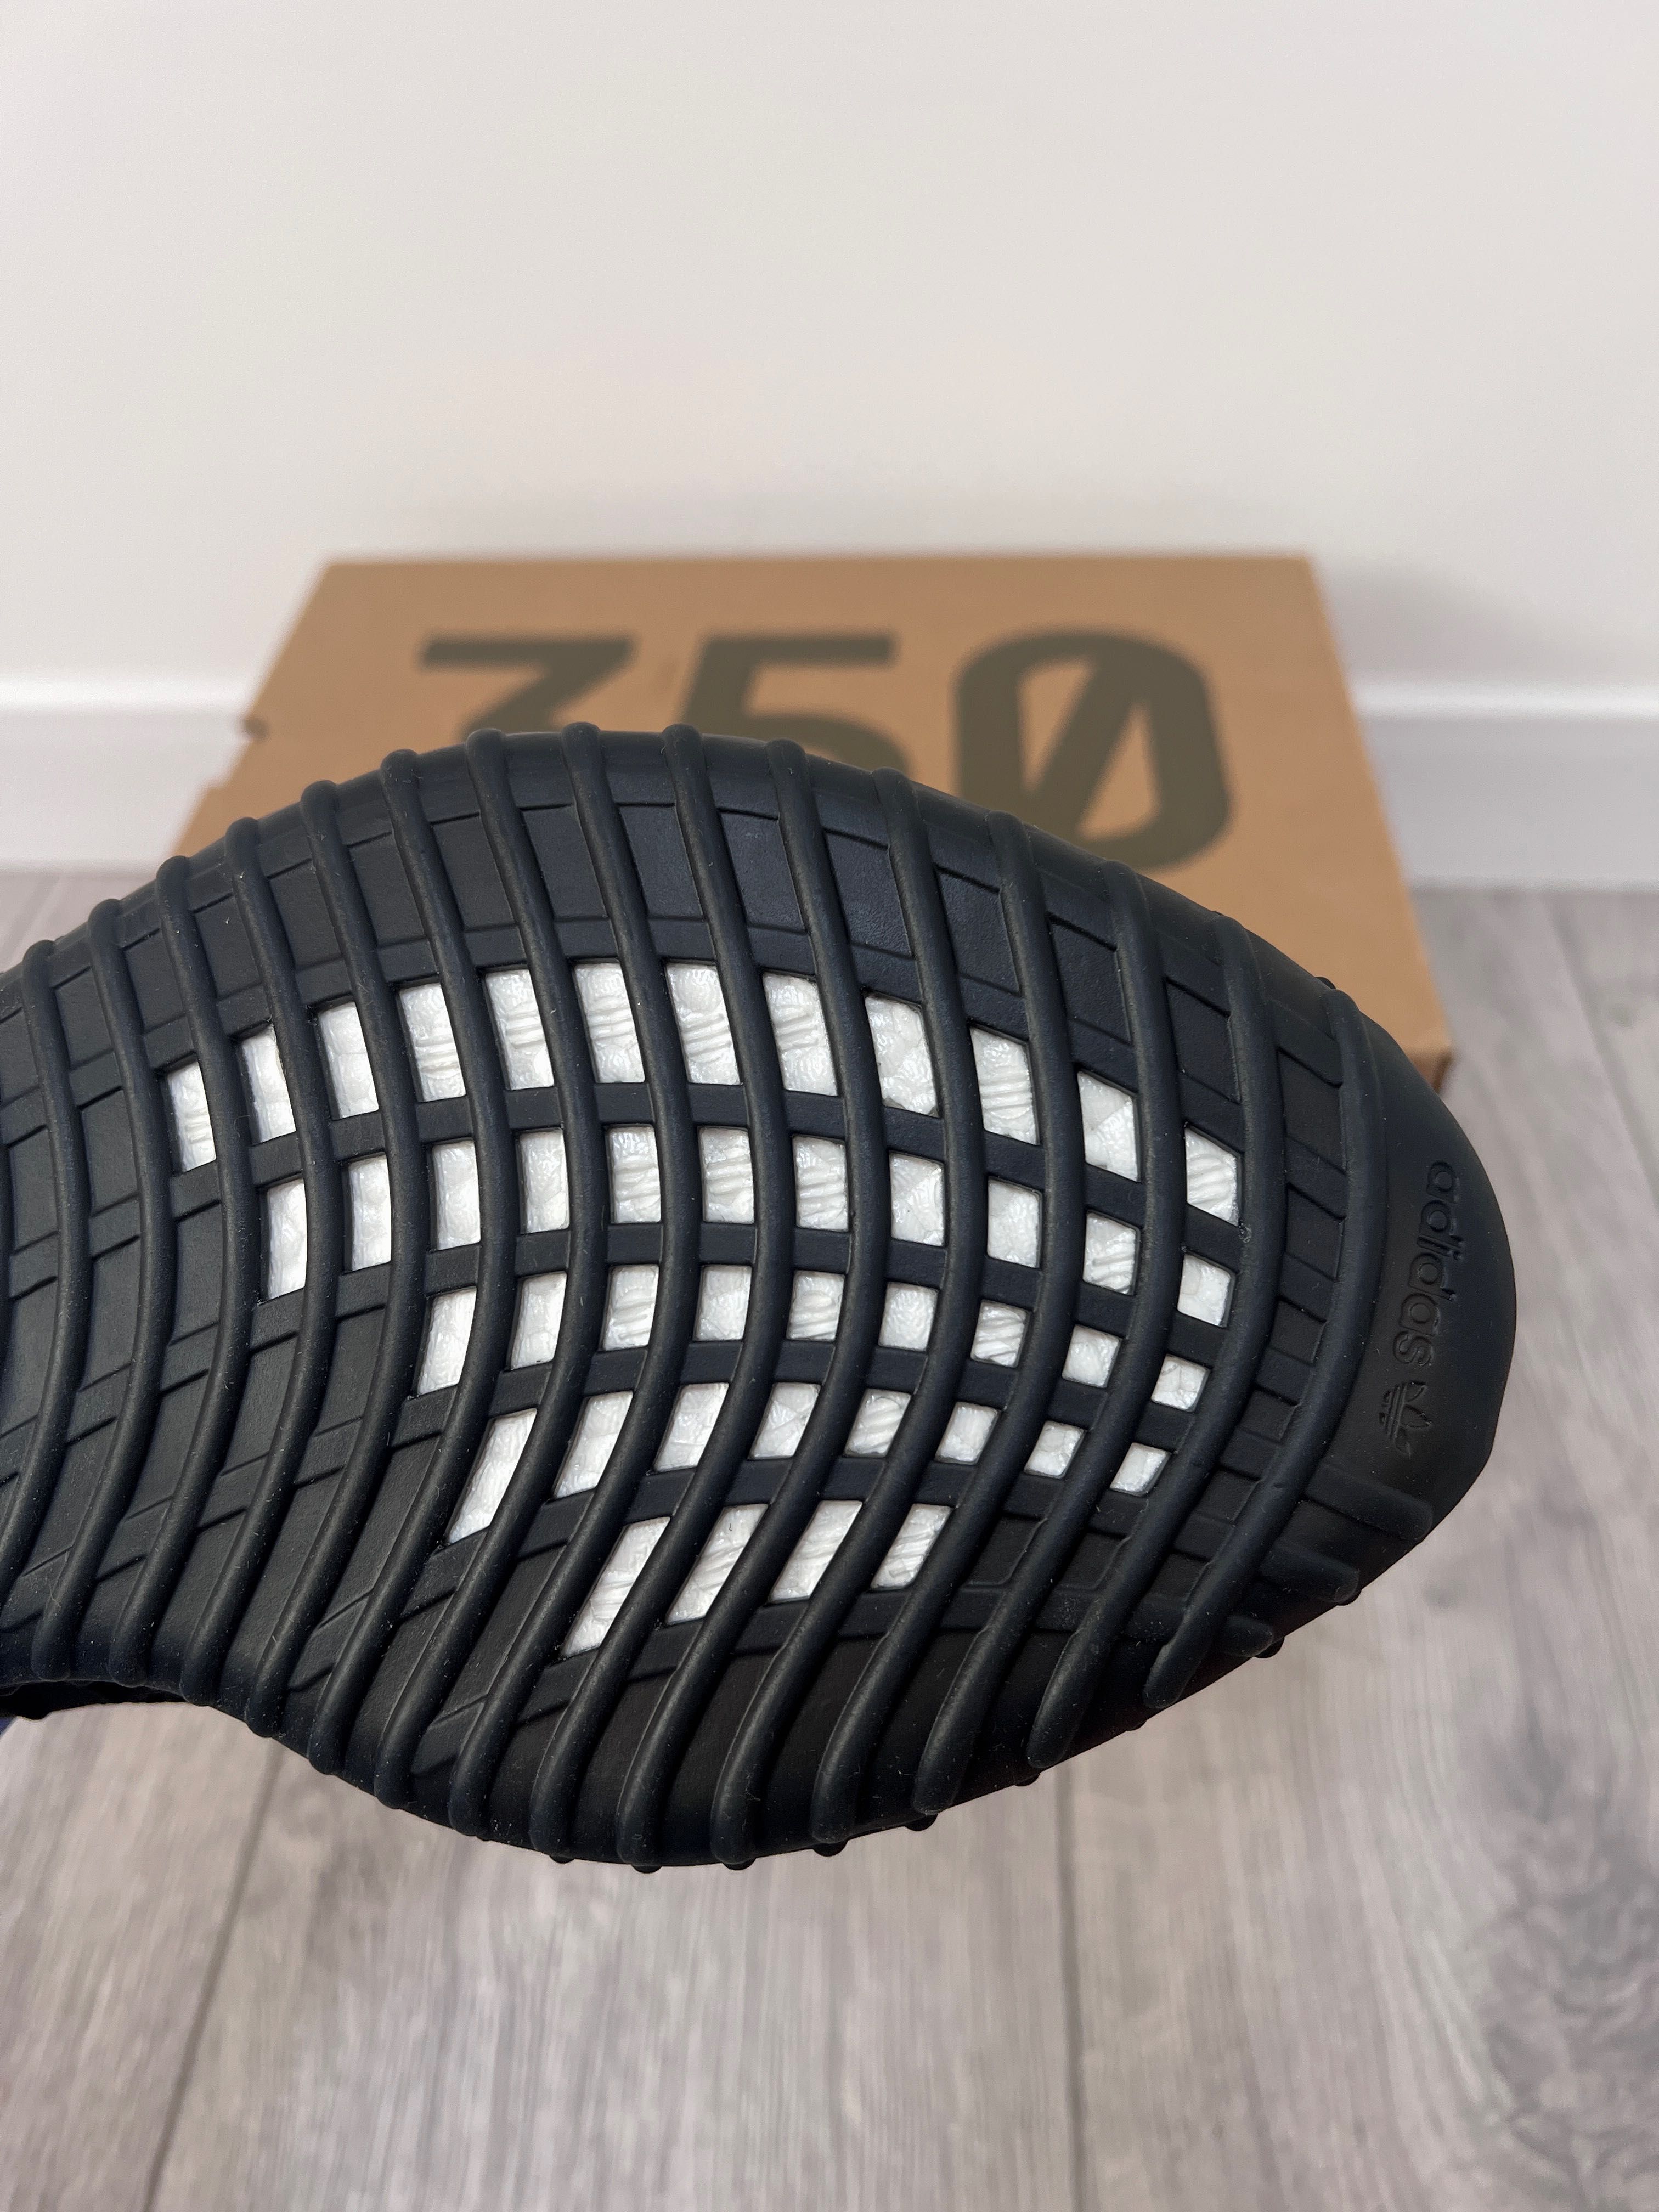 Adidas Yeezy Boost 350 V2 Static Black